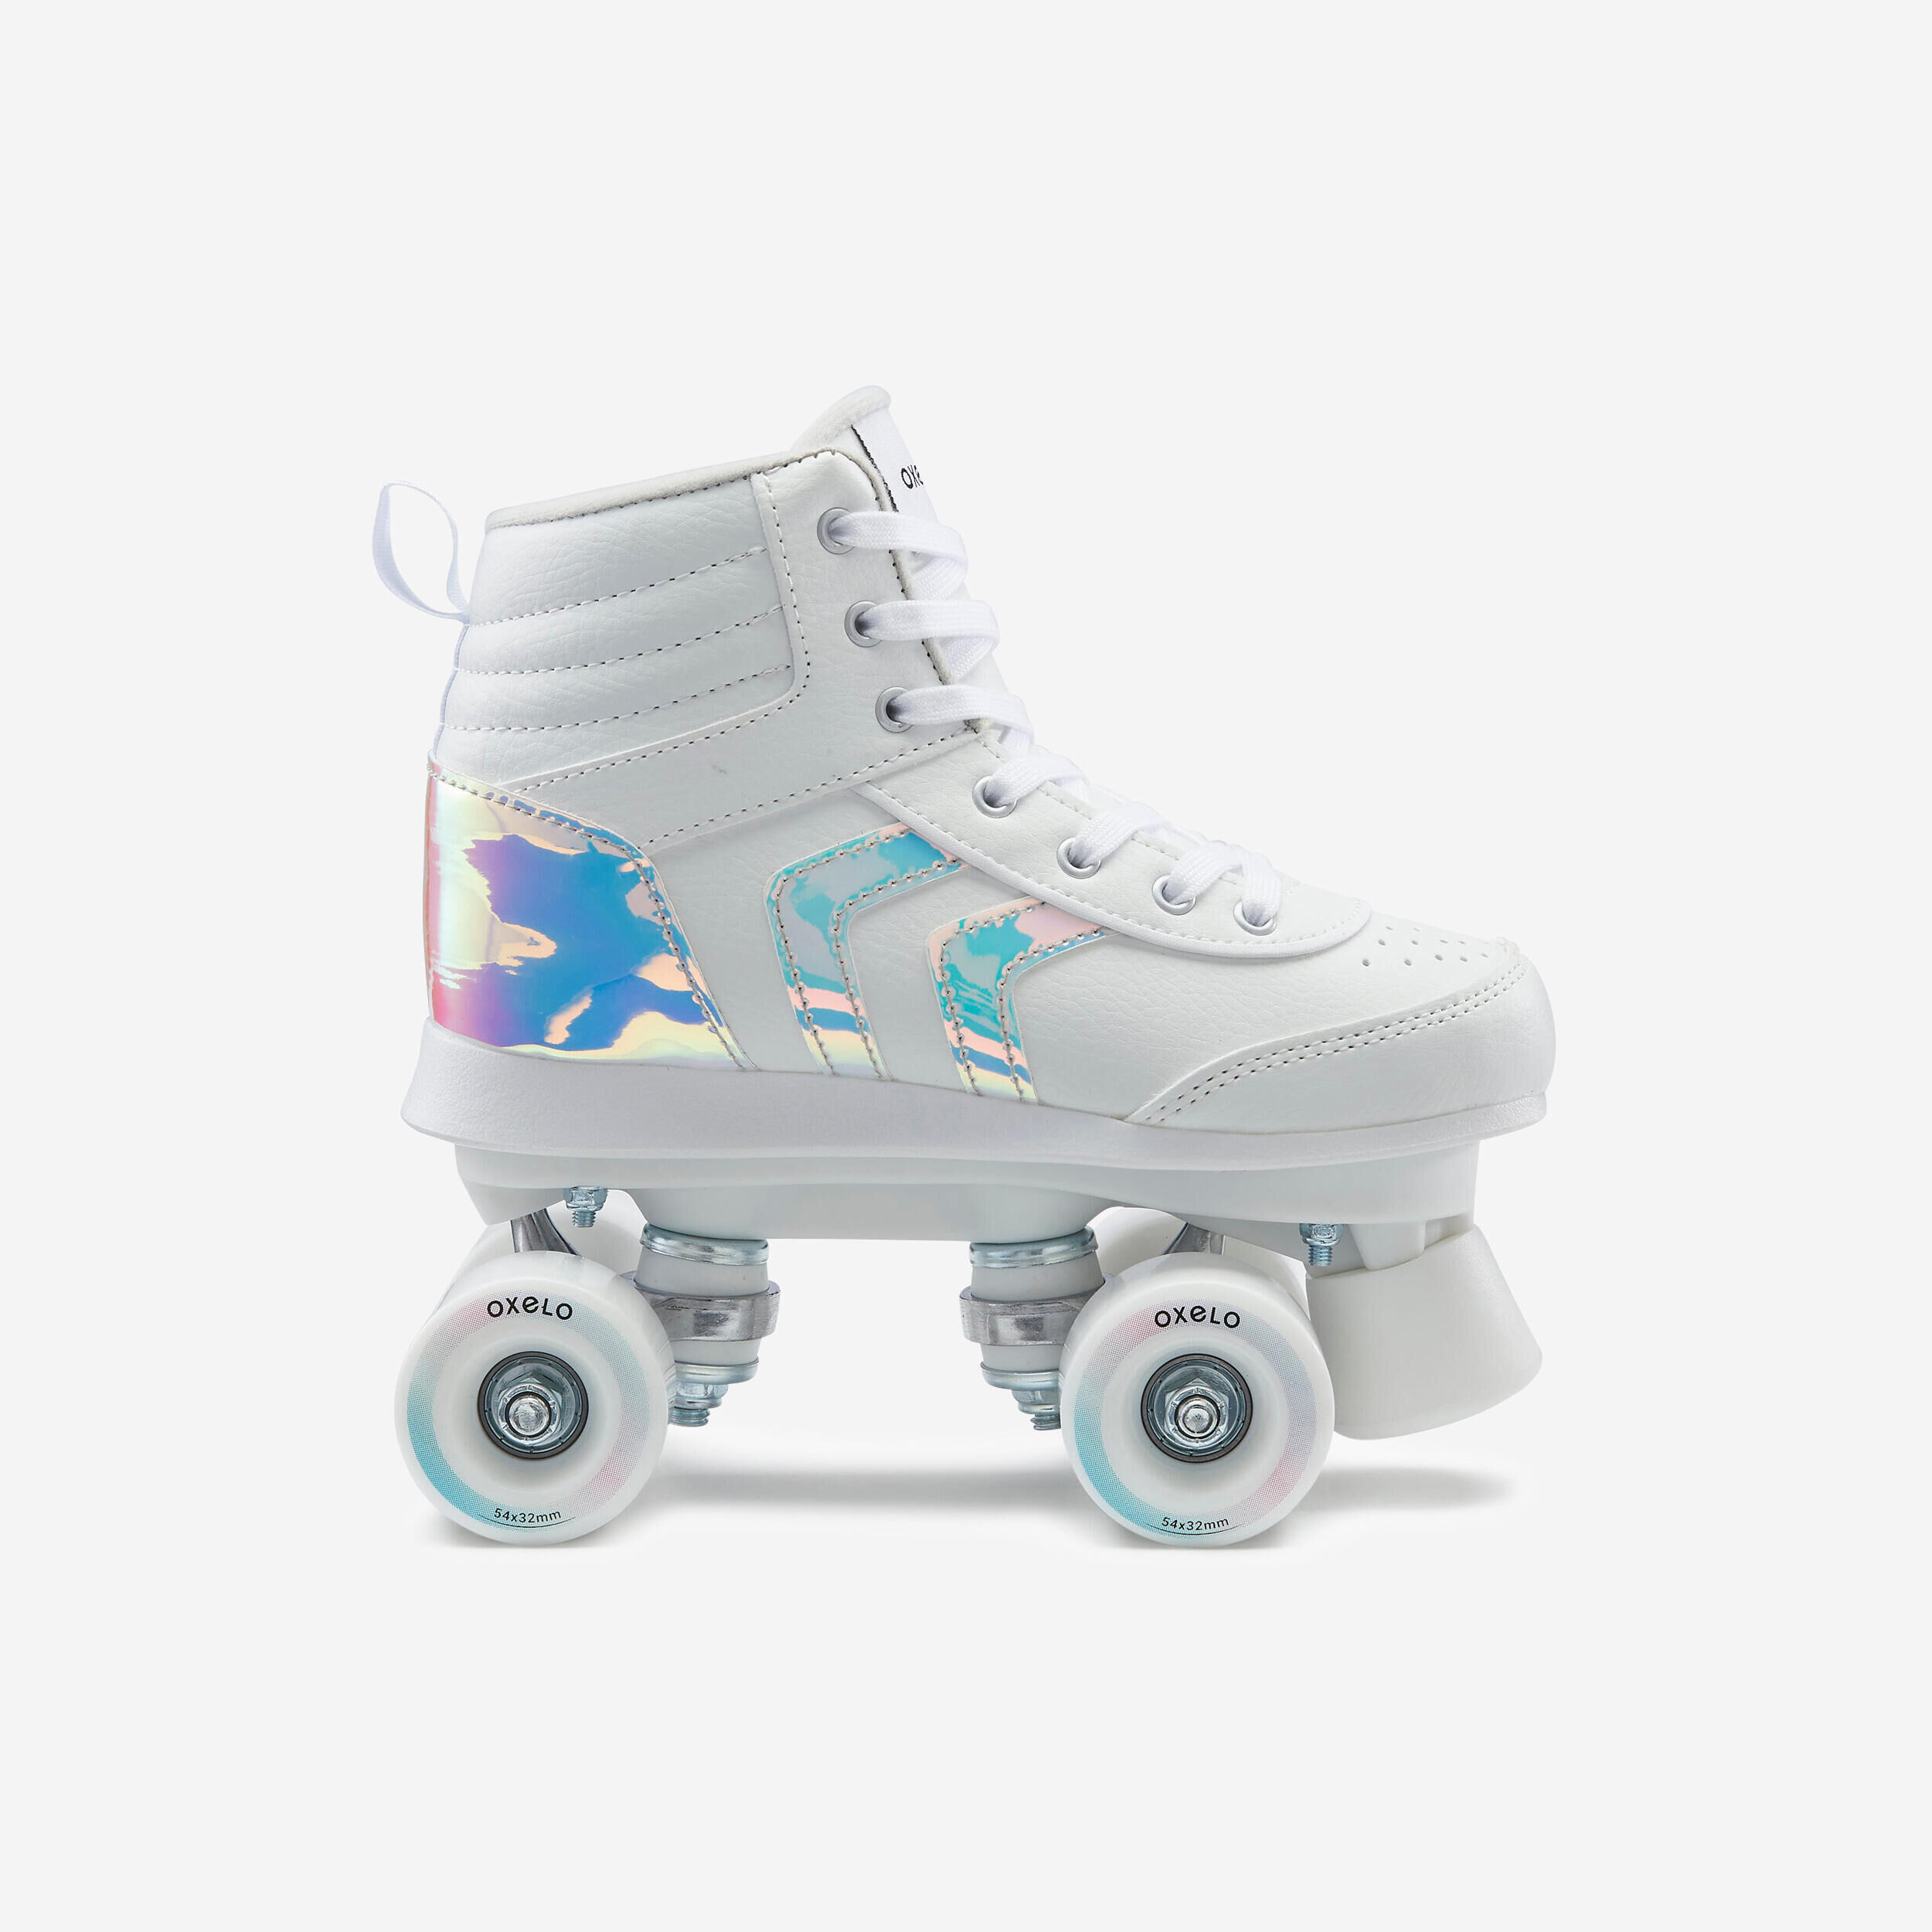 OXELO Kids' Roller Skates Quad 100 - Holographic White